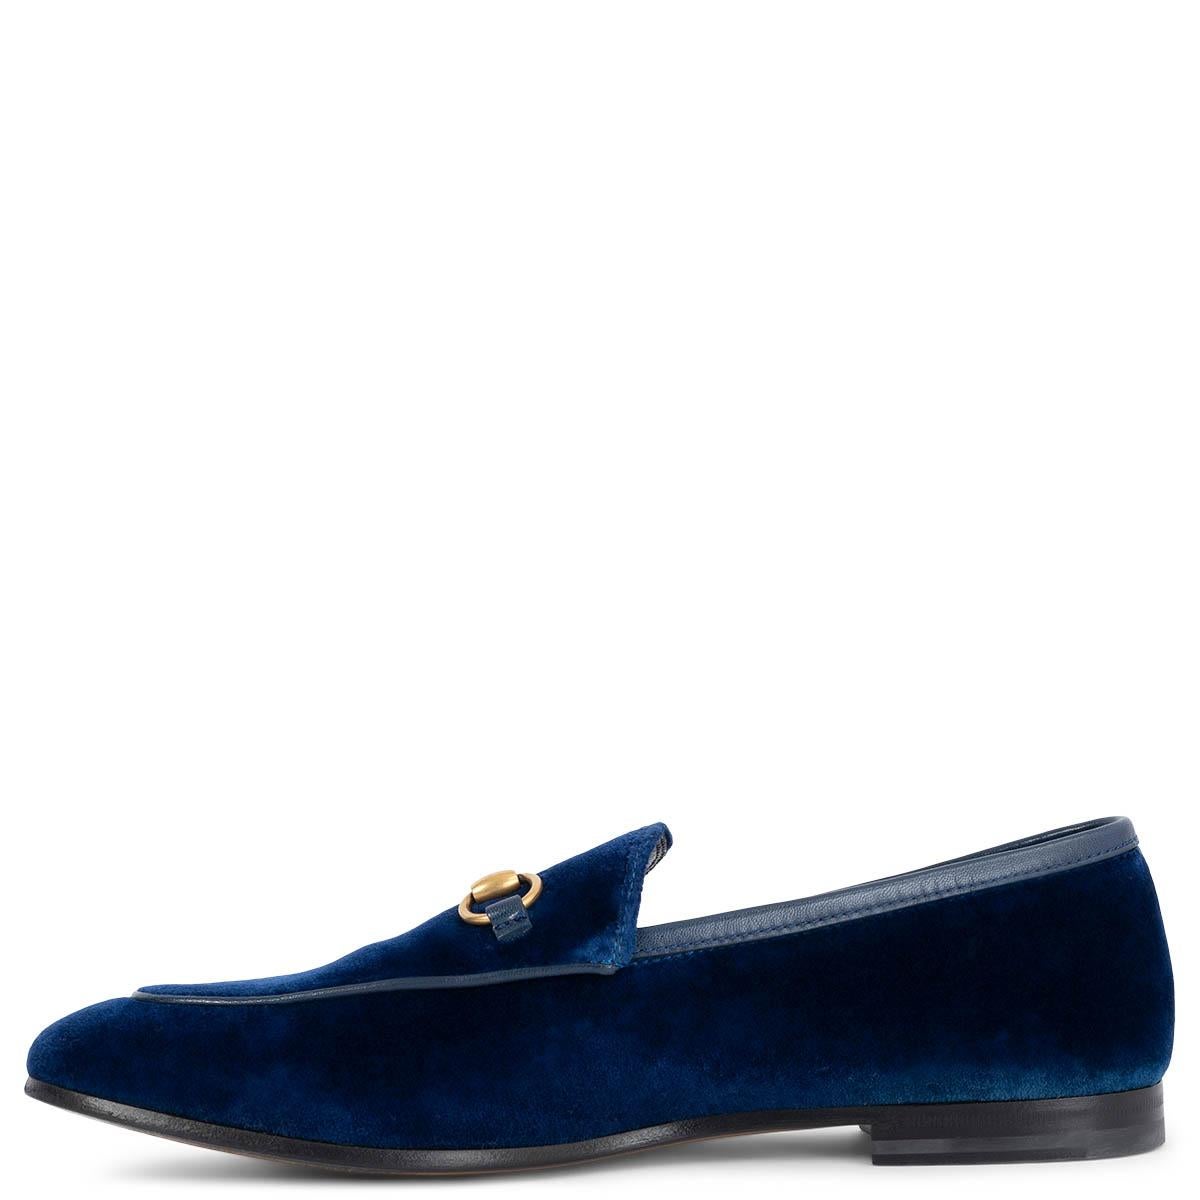 Black GUCCI royal blue velvet JORDANN HORSEBIT Loafers Flats Shoes 37.5